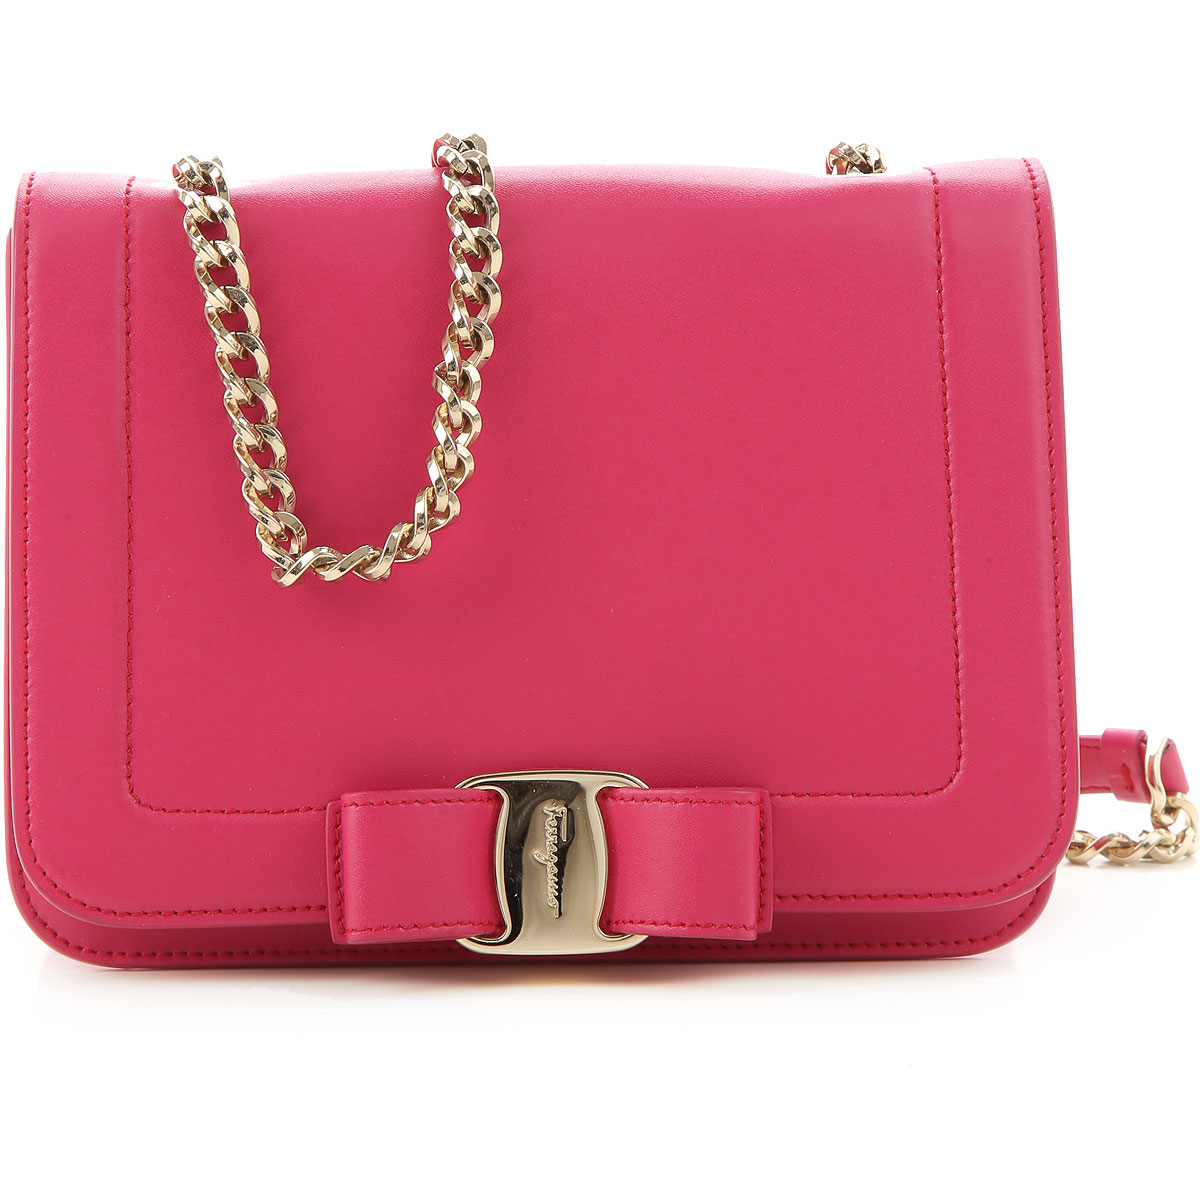 Handbags Salvatore Ferragamo, Style code: 21g877-3-0685835